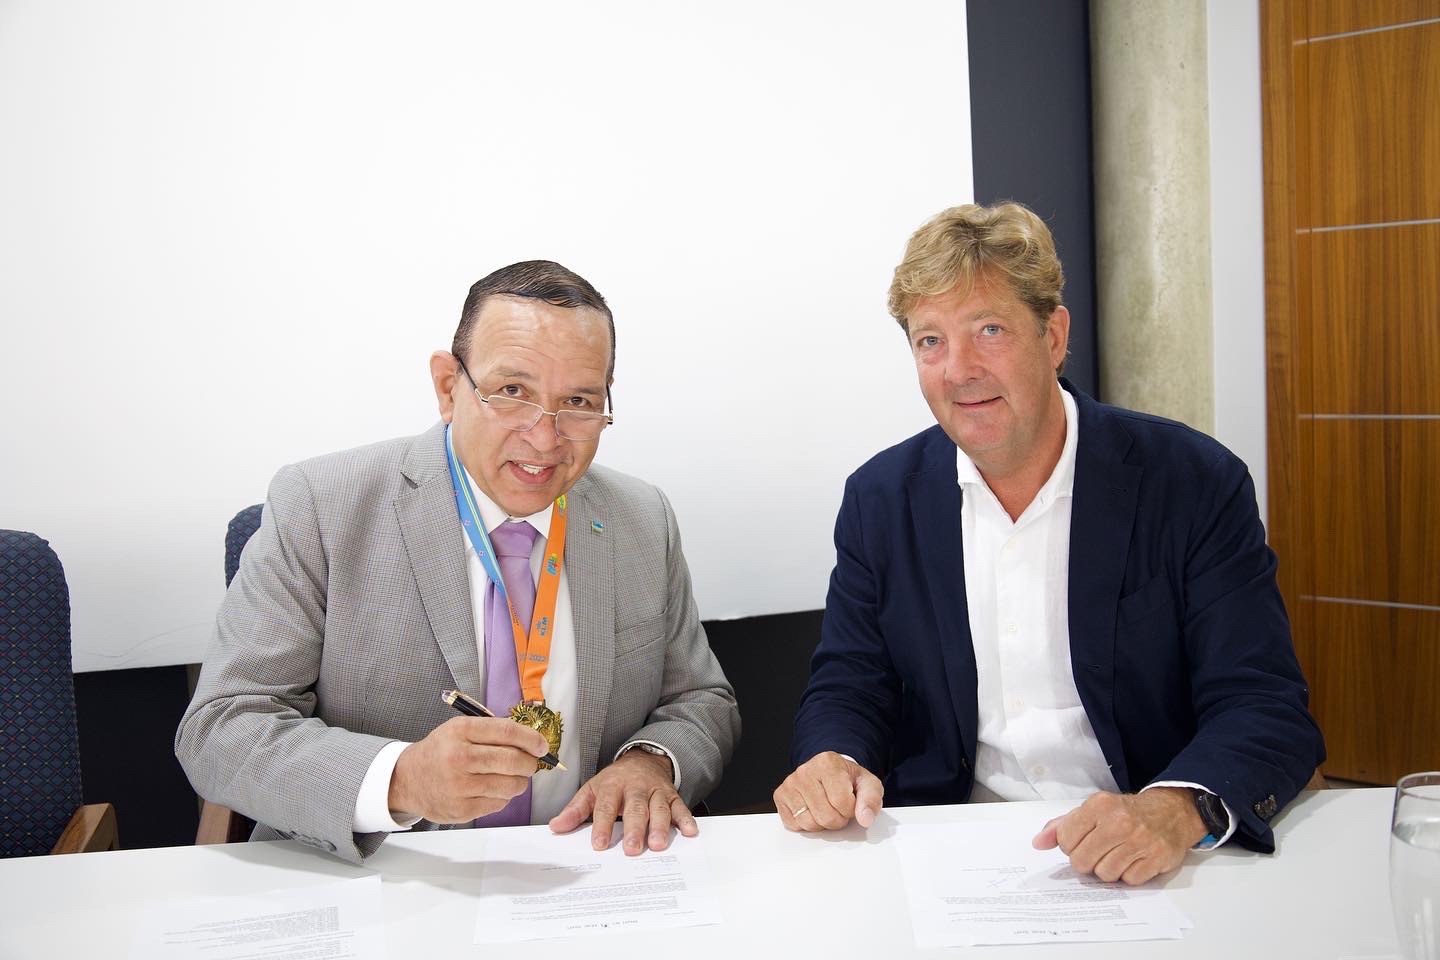 Minister Endy Croes a firma acuerdo pa extende KLM Aruba Marathon pa 3 aña mas